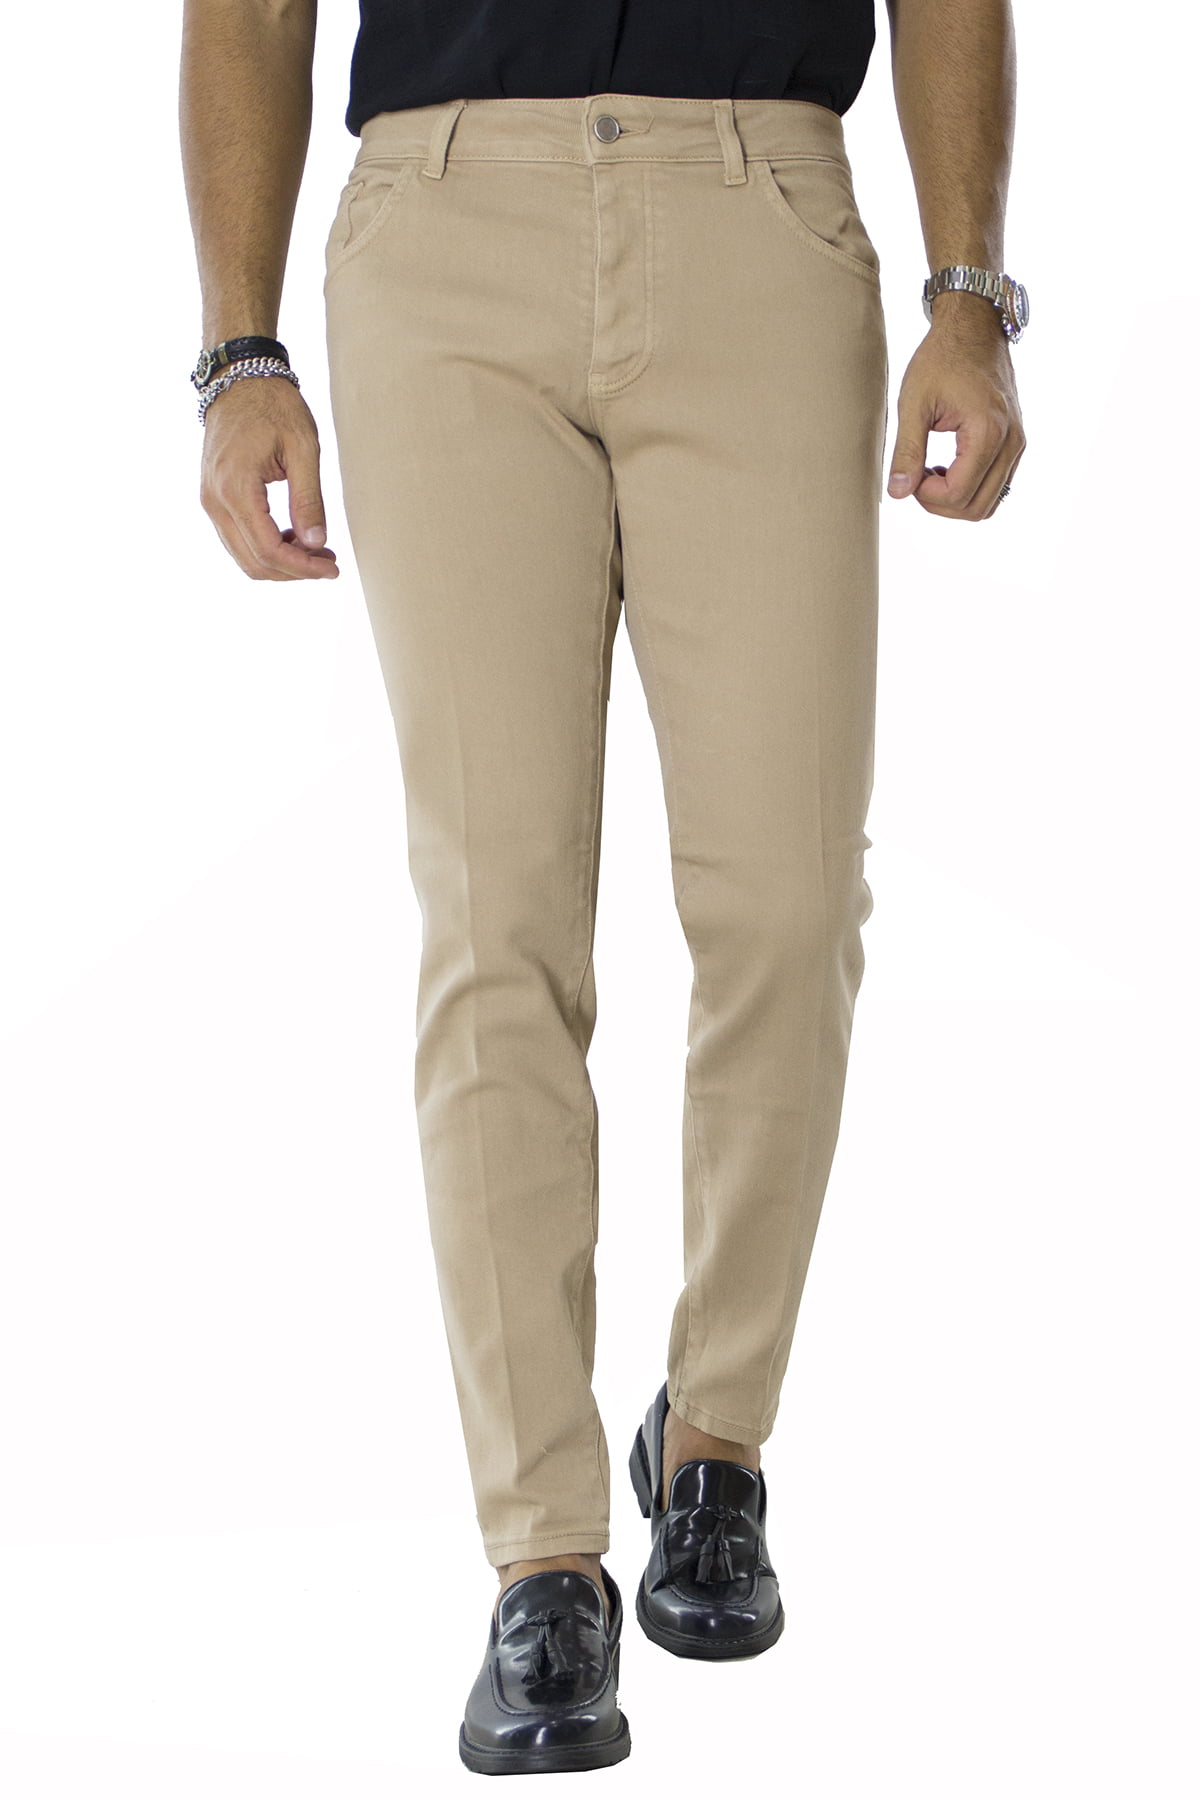 Jeans uomo beige tinta unita modello 5 tasche slim fit made in italy